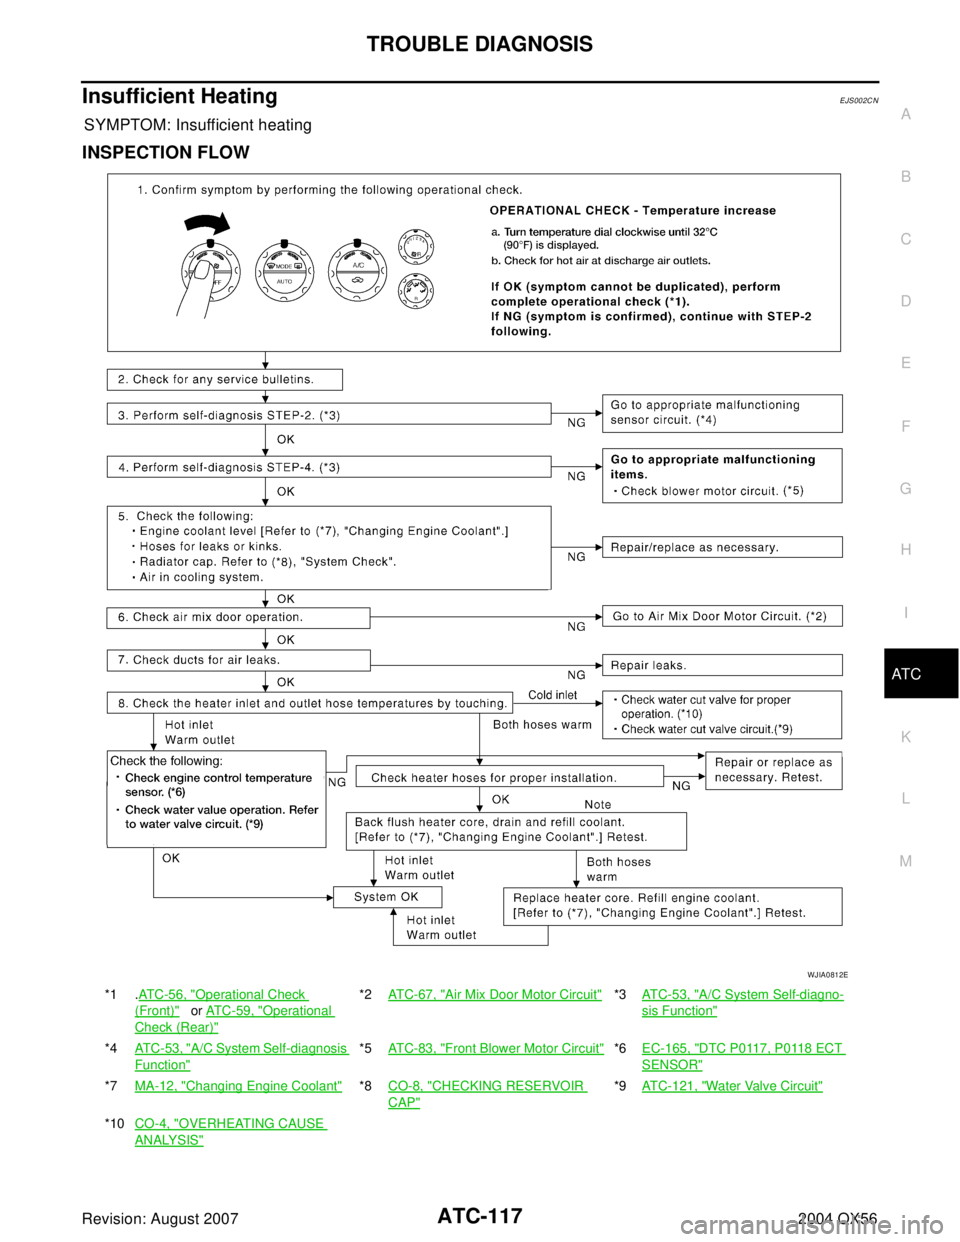 INFINITI QX56 2004  Factory Service Manual TROUBLE DIAGNOSIS
ATC-117
C
D
E
F
G
H
I
K
L
MA
B
AT C
Revision: August 20072004 QX56
Insufficient HeatingEJS002CN
SYMPTOM: Insufficient heating
INSPECTION FLOW
*1 .ATC-56, "Operational Check 
(Front)"